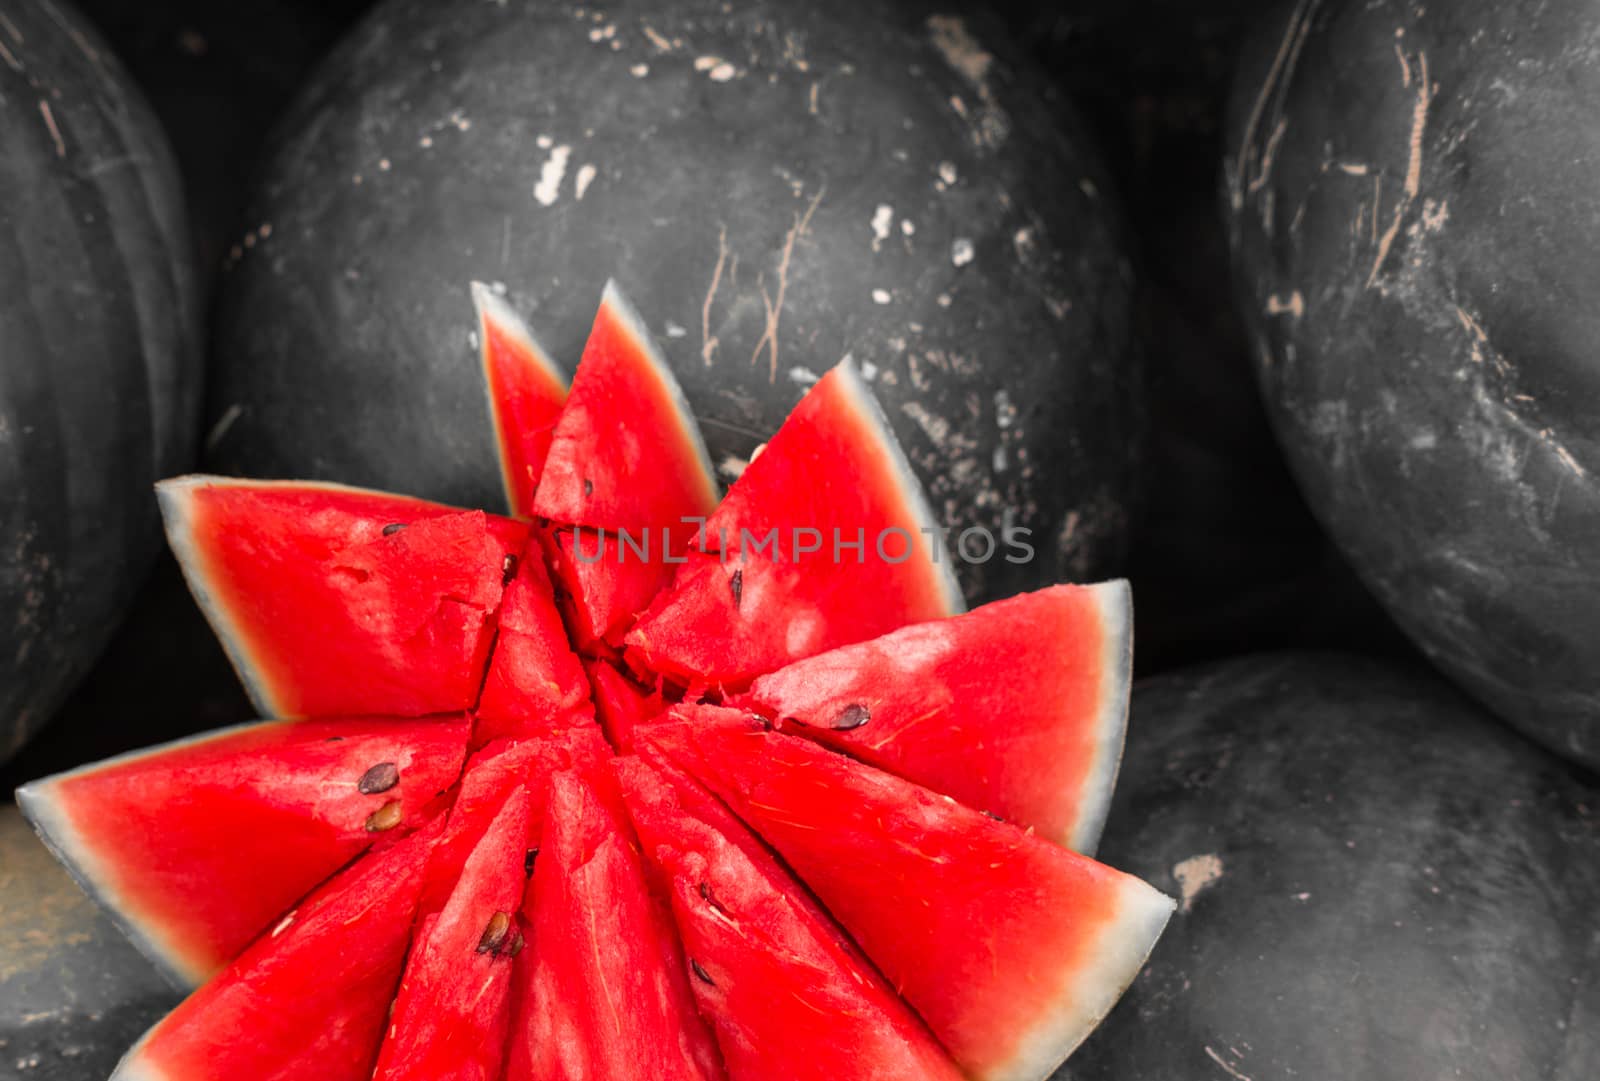 Watermelon by robertboss